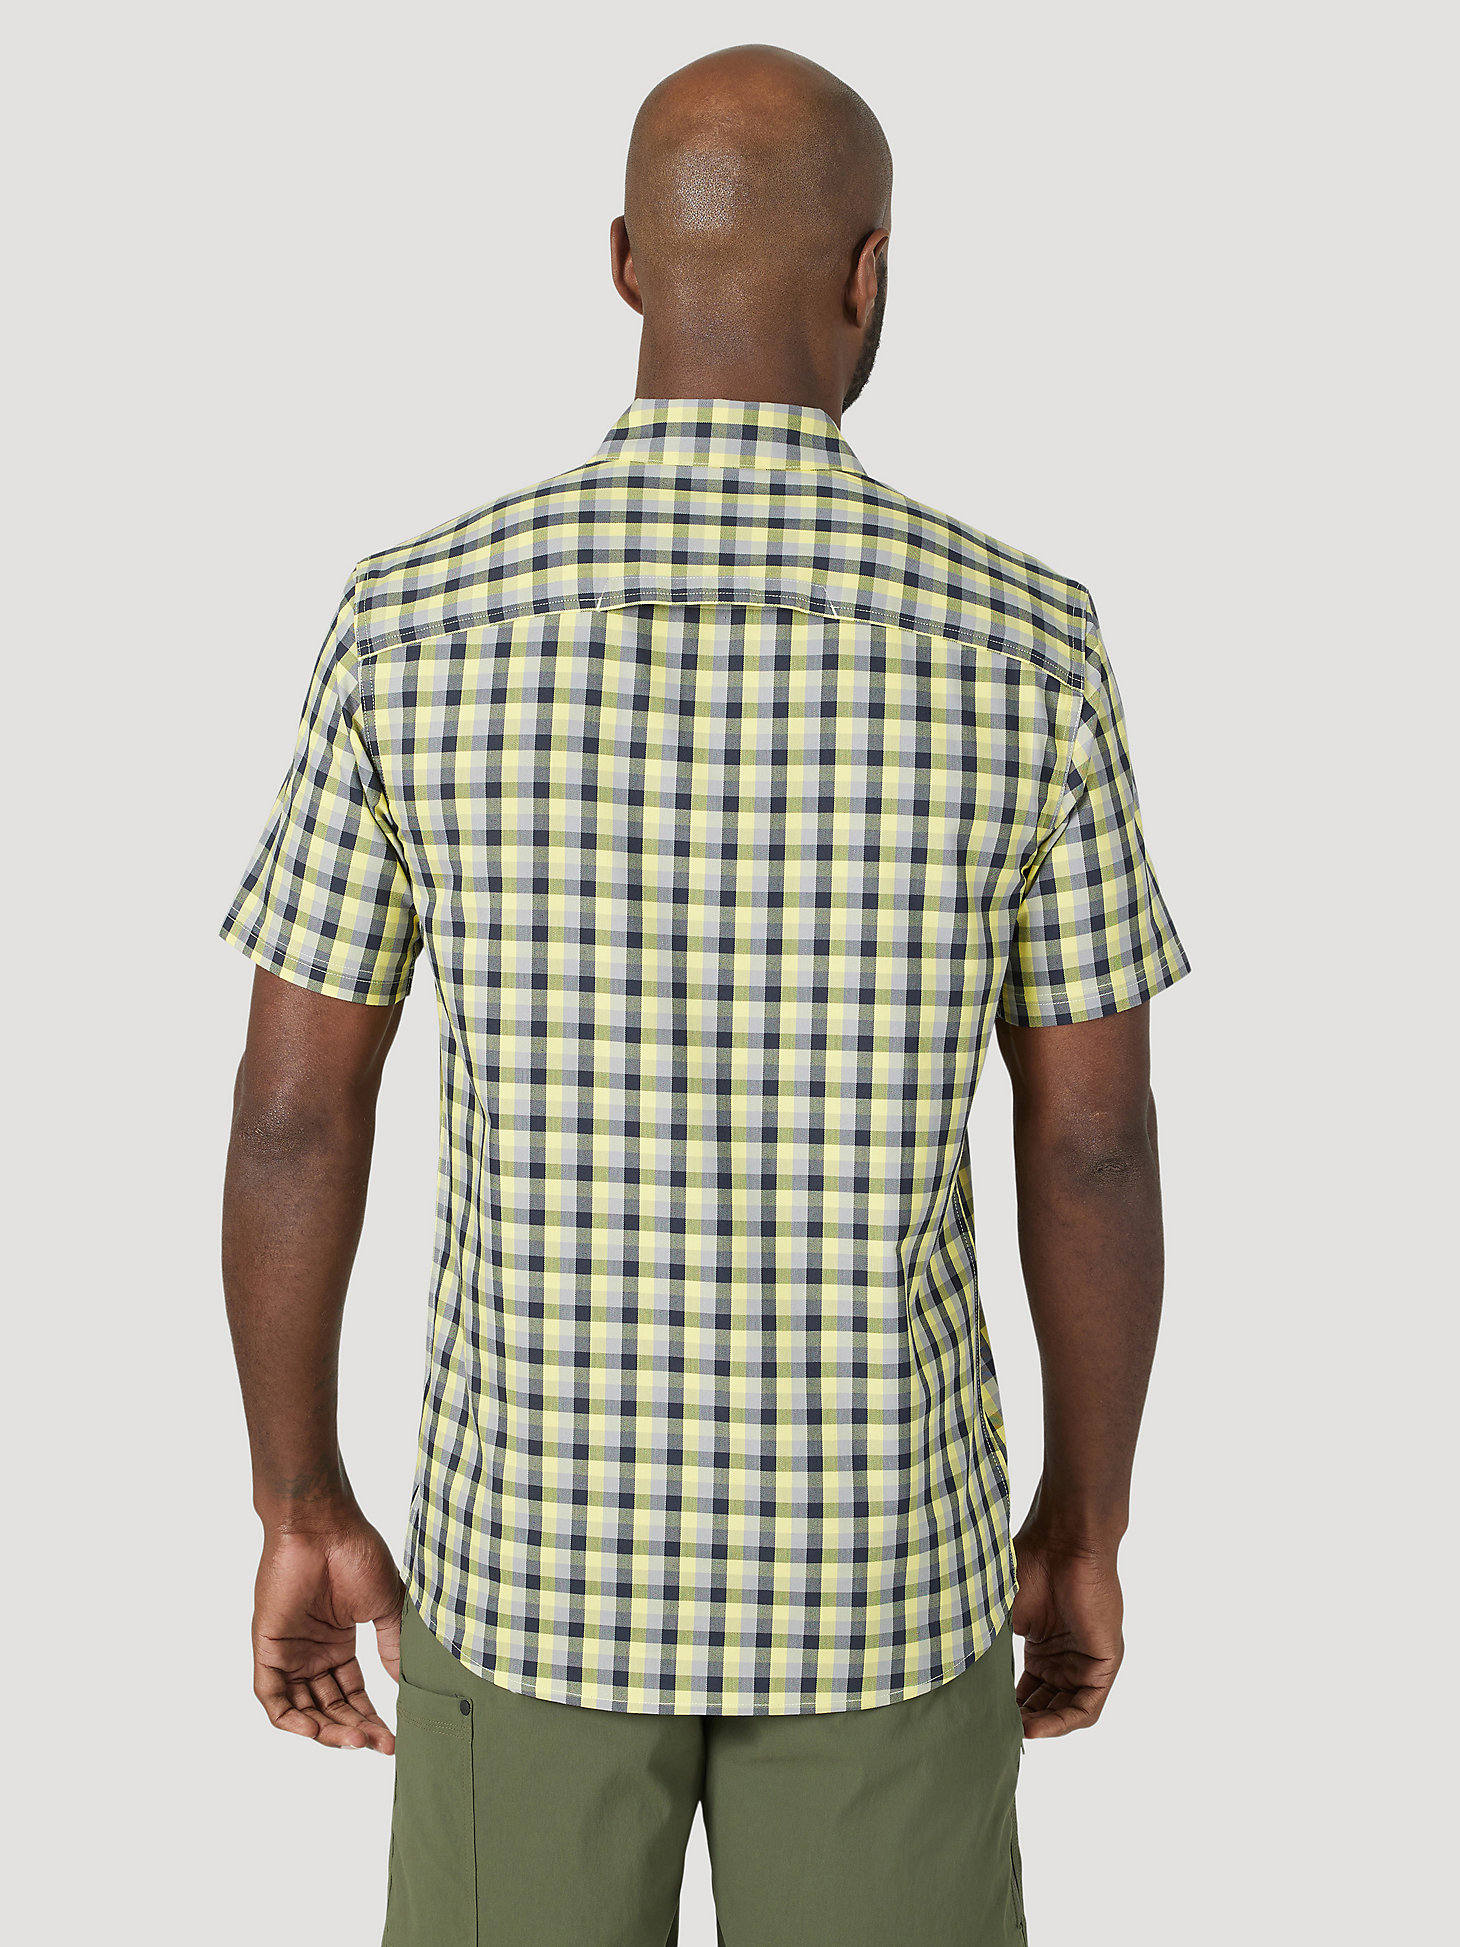 Men's Eco-Friendly Plaid Short Sleeve Camp Shirt in Primrose Yellow alternative view 1